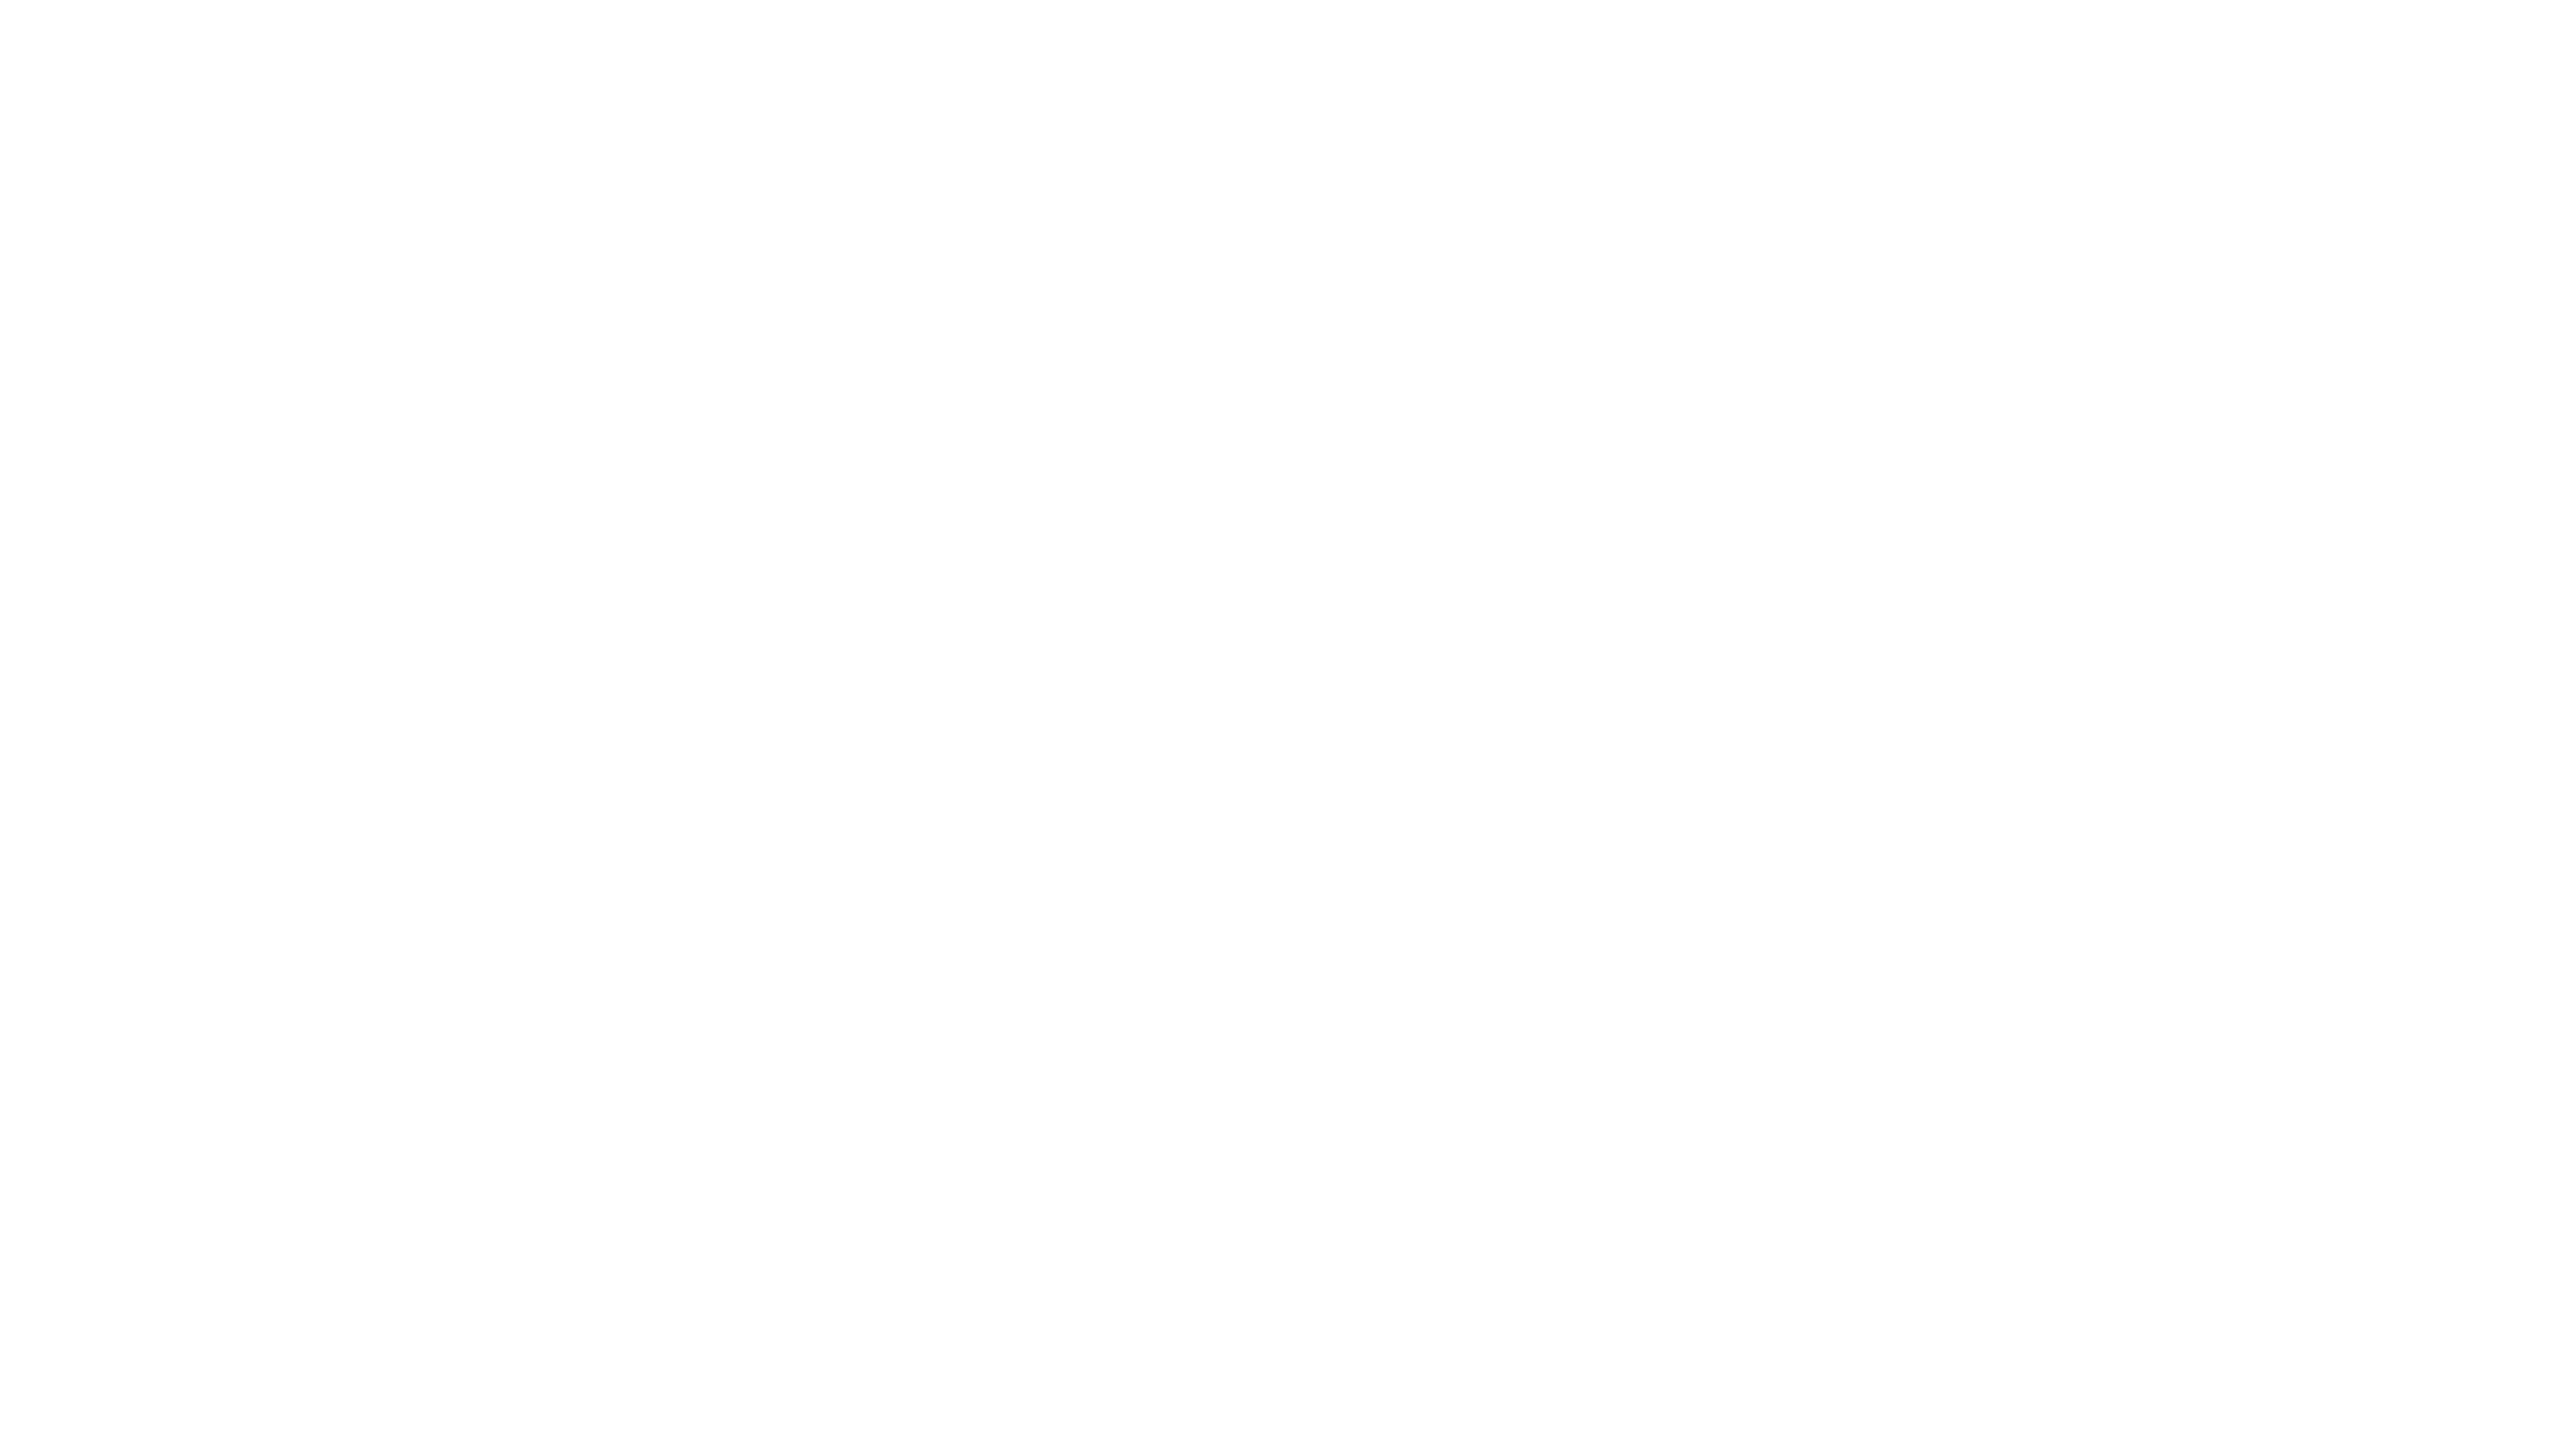 RGB_Thirdera_logo lockup_white